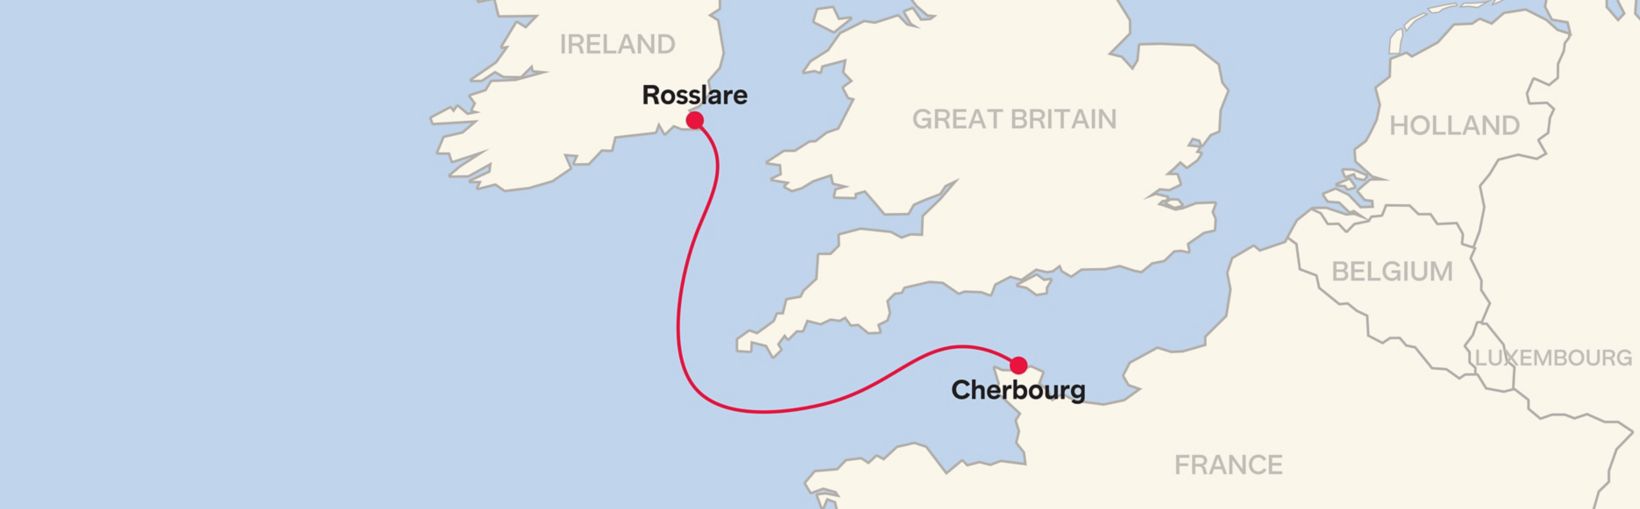 Carte des itinéraires de Stena Line Rosslare -Cherbourg